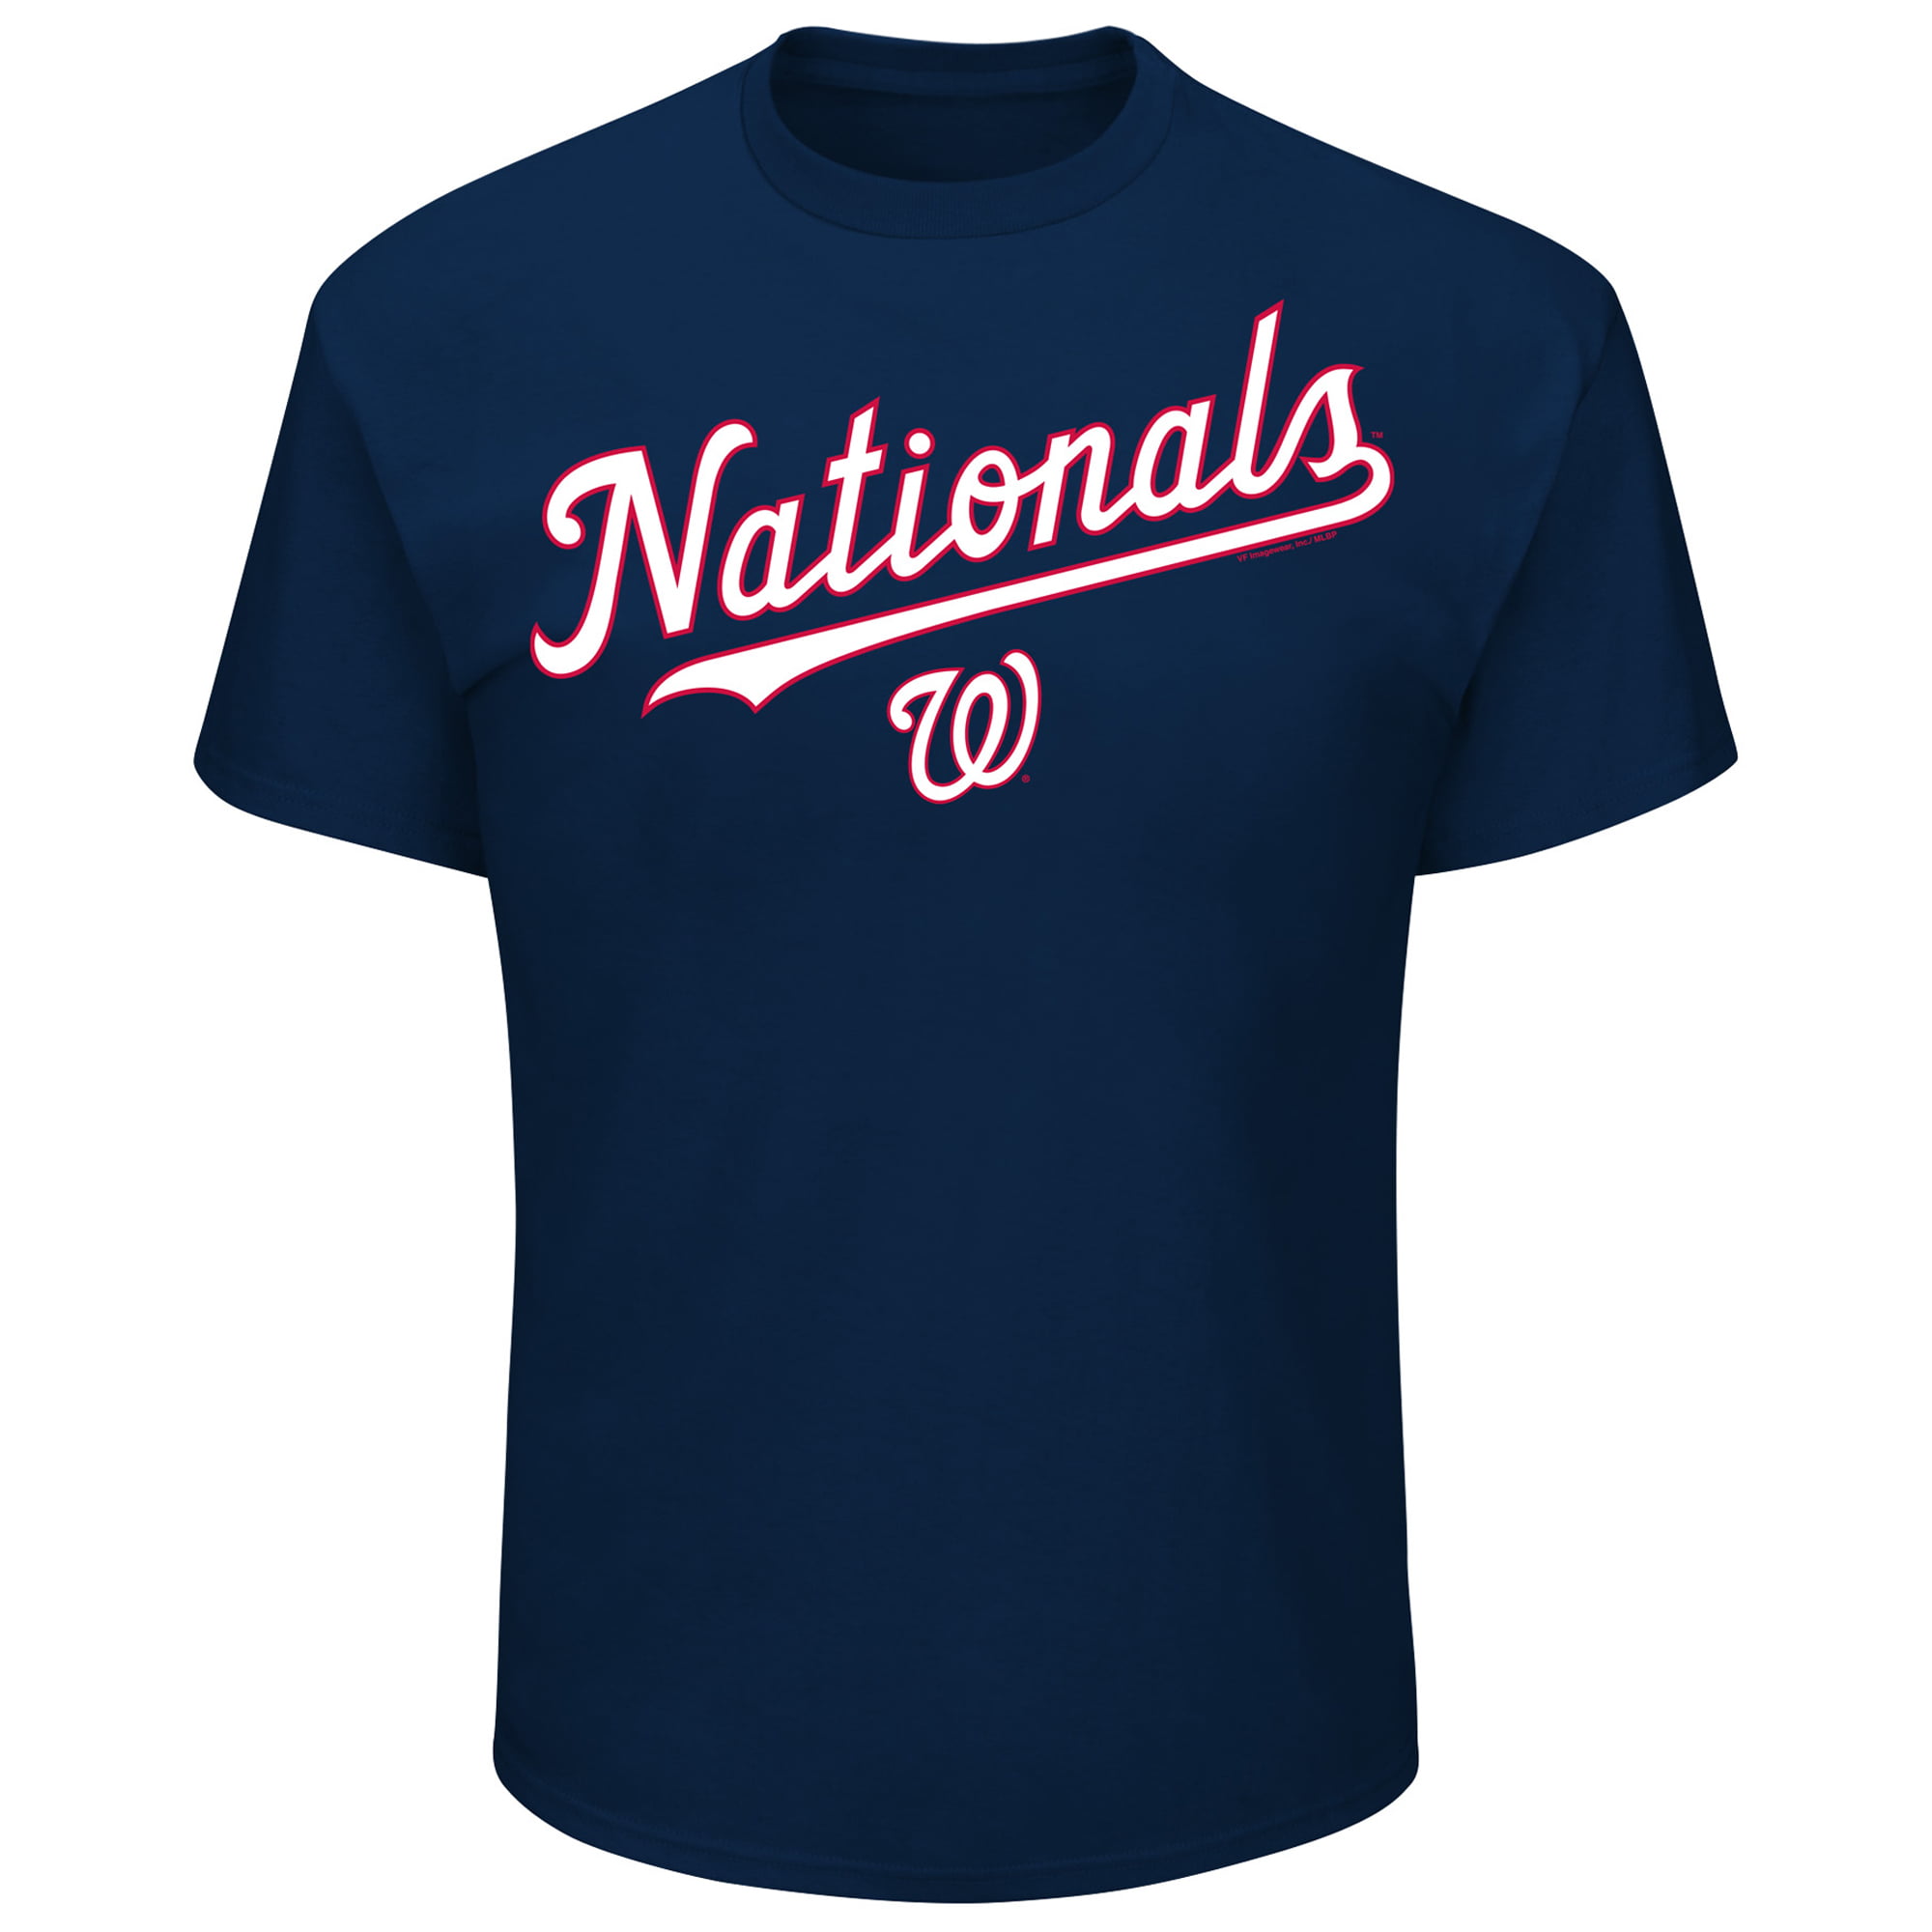 washington nationals t shirts